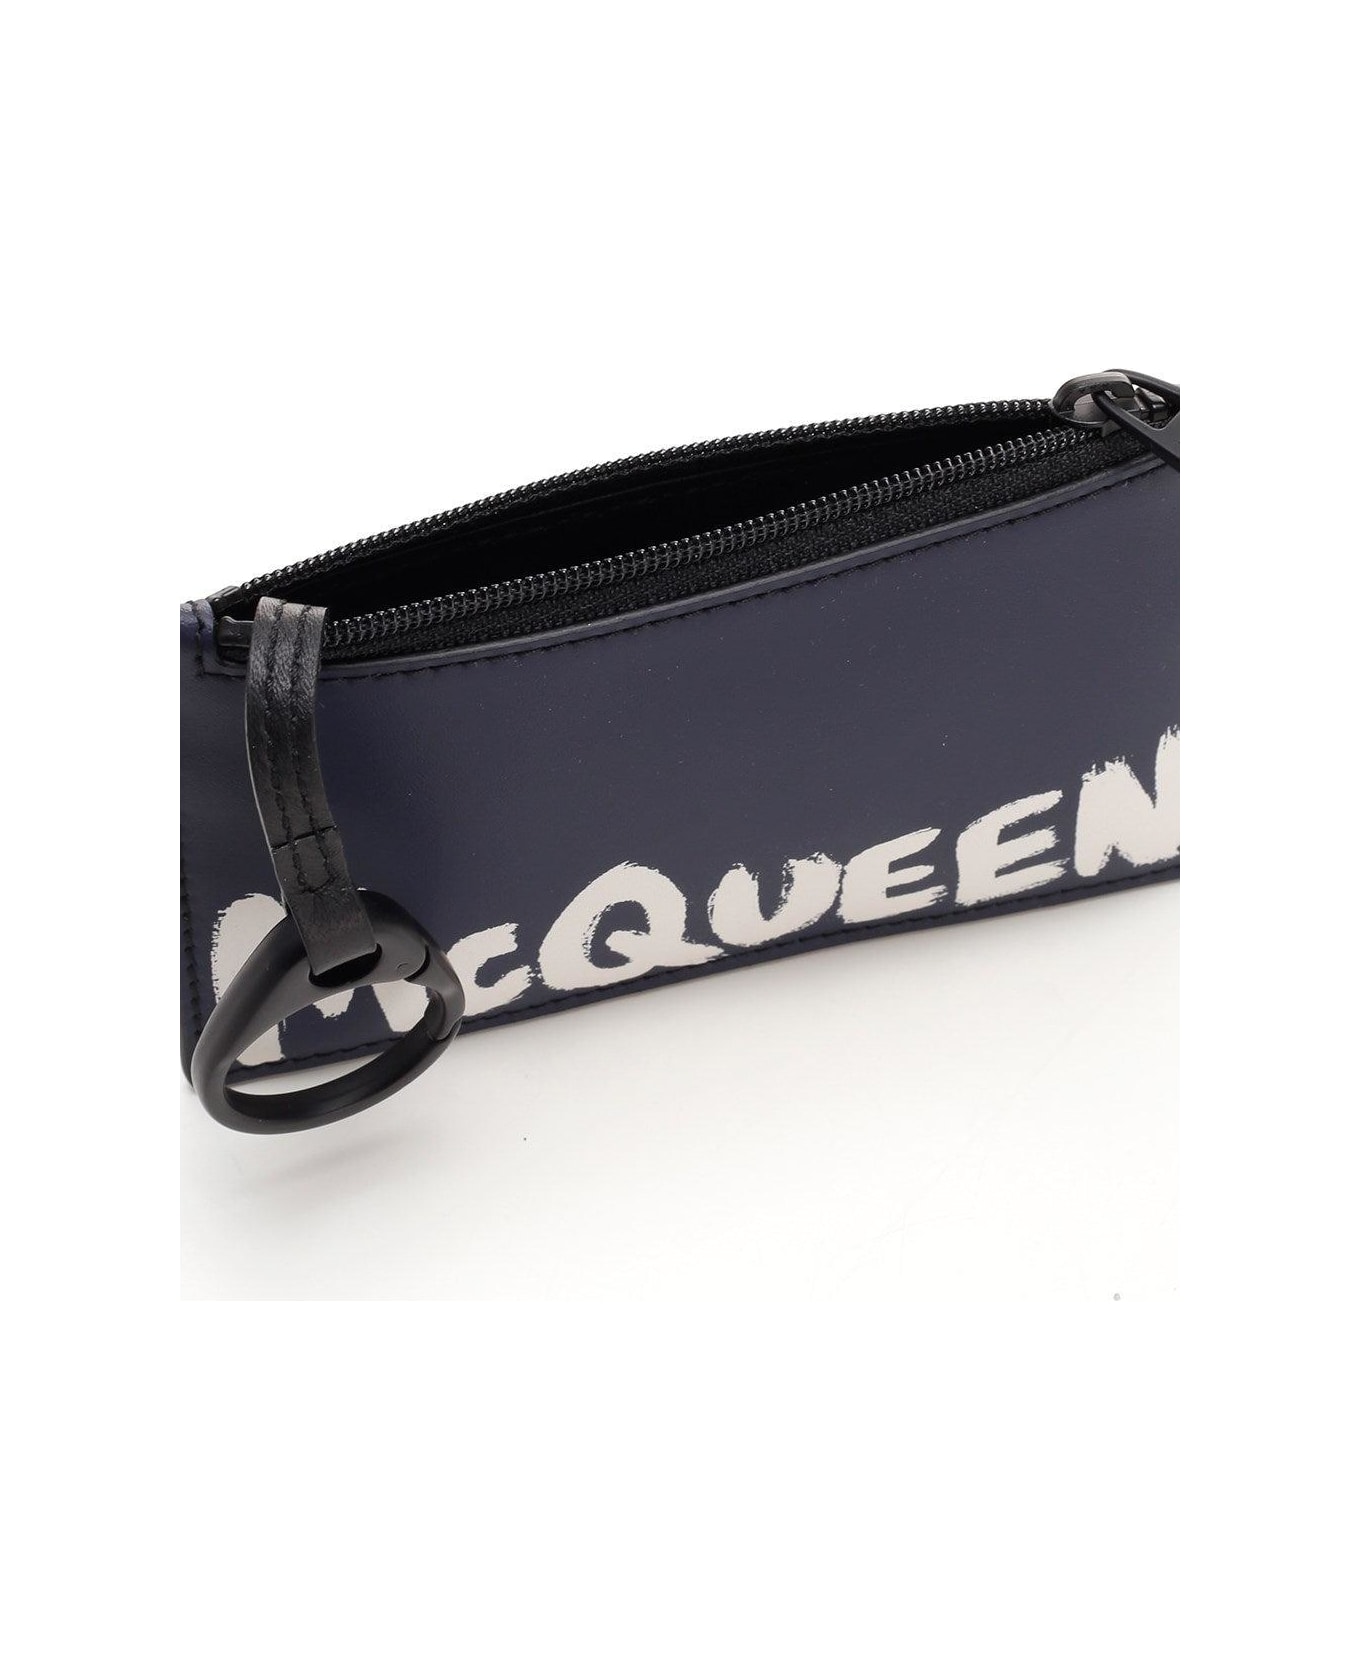 Alexander McQueen Logo Printed Zipped Wallet - Blu